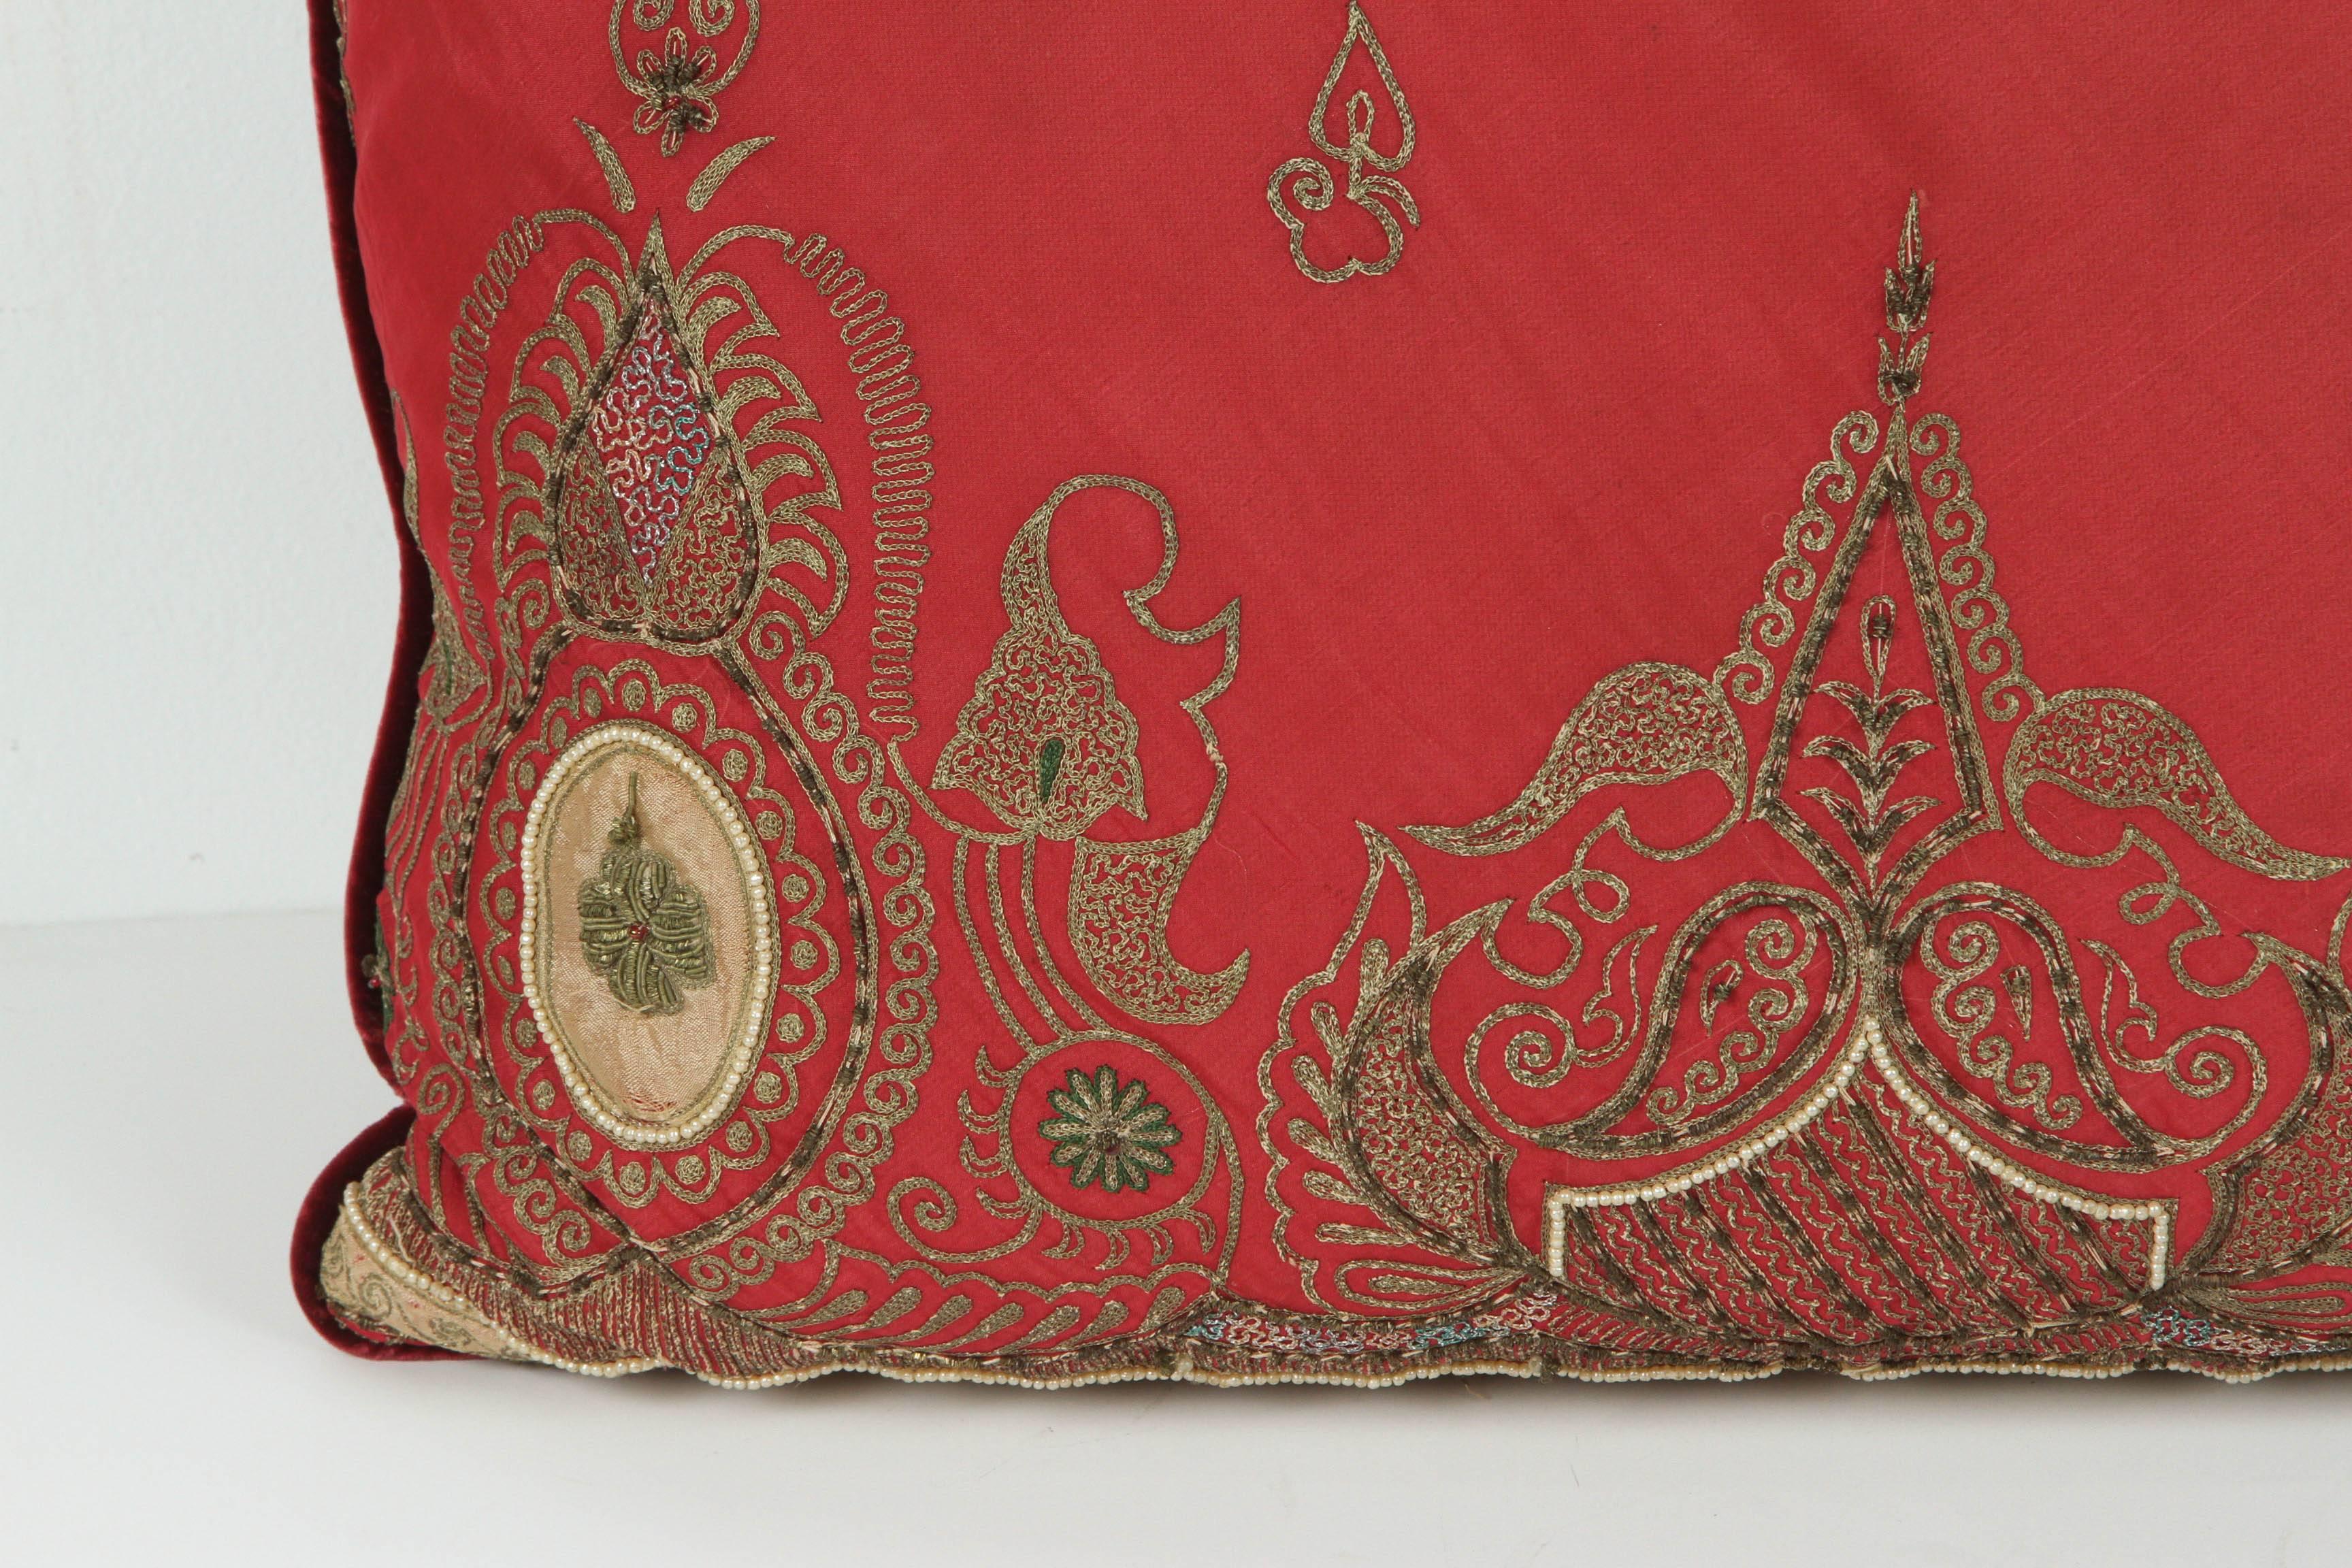 20th Century Antique Turkish Ottoman Silk Pillows with Metallic Threads a Pair